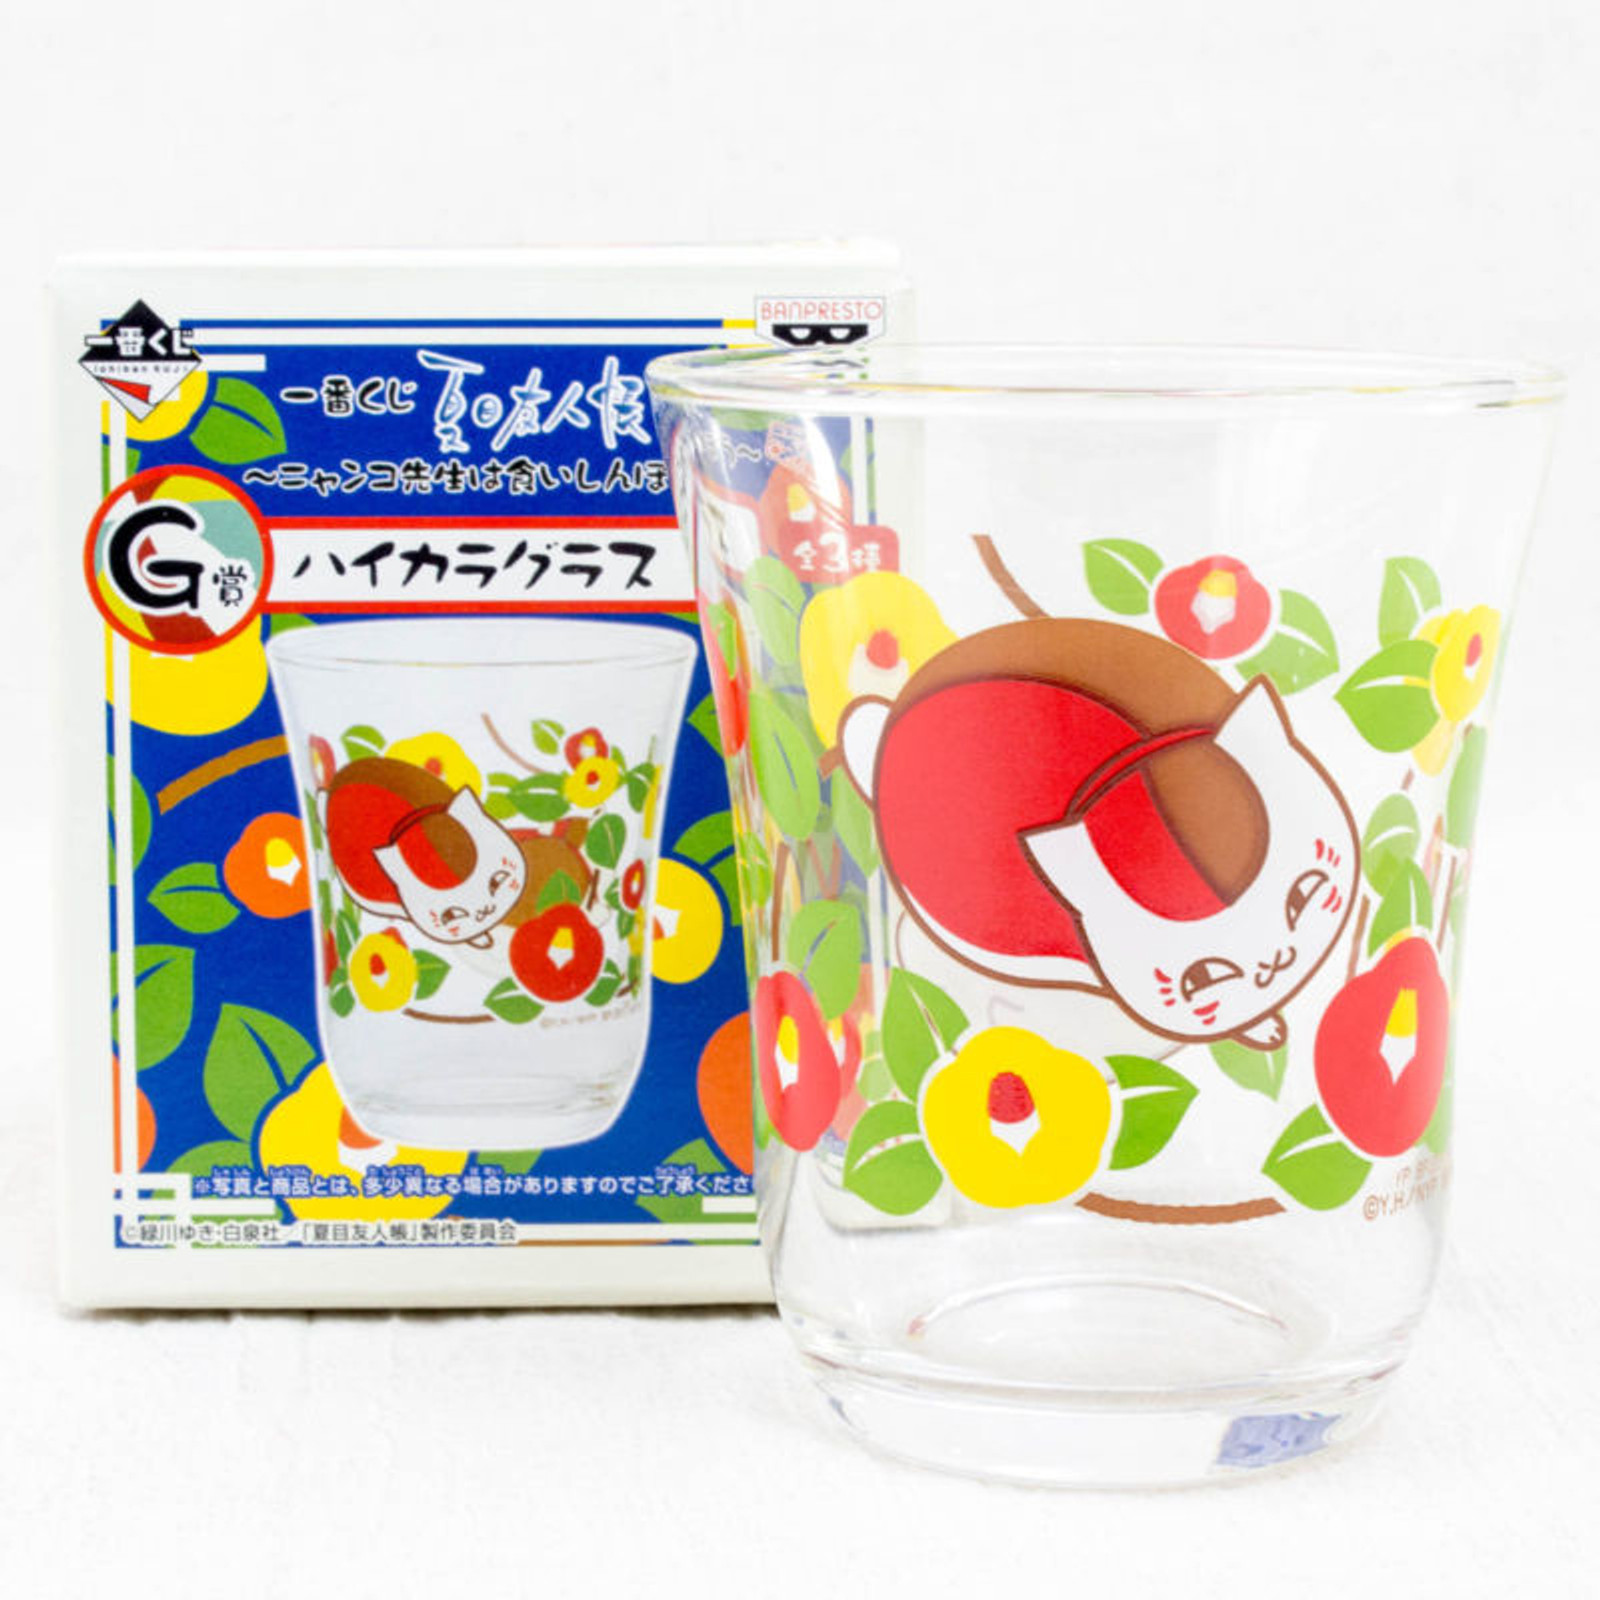 Natsume's Book of Friends Nyanko Sensei Colorful Glass Banpresto JAPAN ANIME MANGA